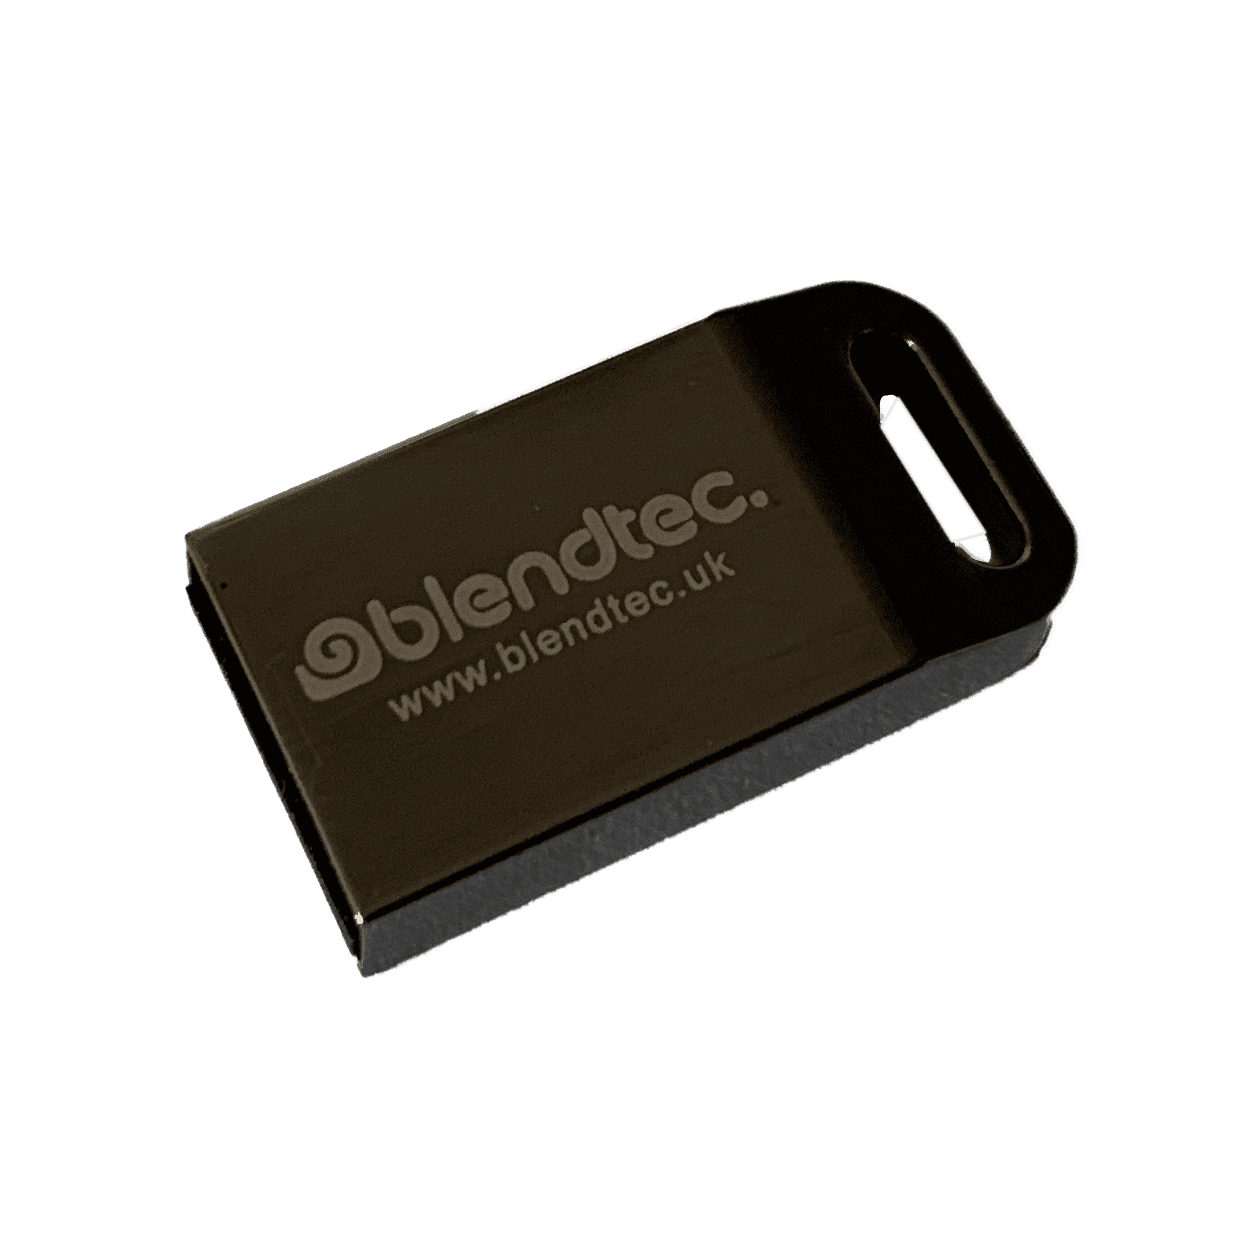 Product Blendtec Commercial USB Drive - LUBA Distribution Ltd image